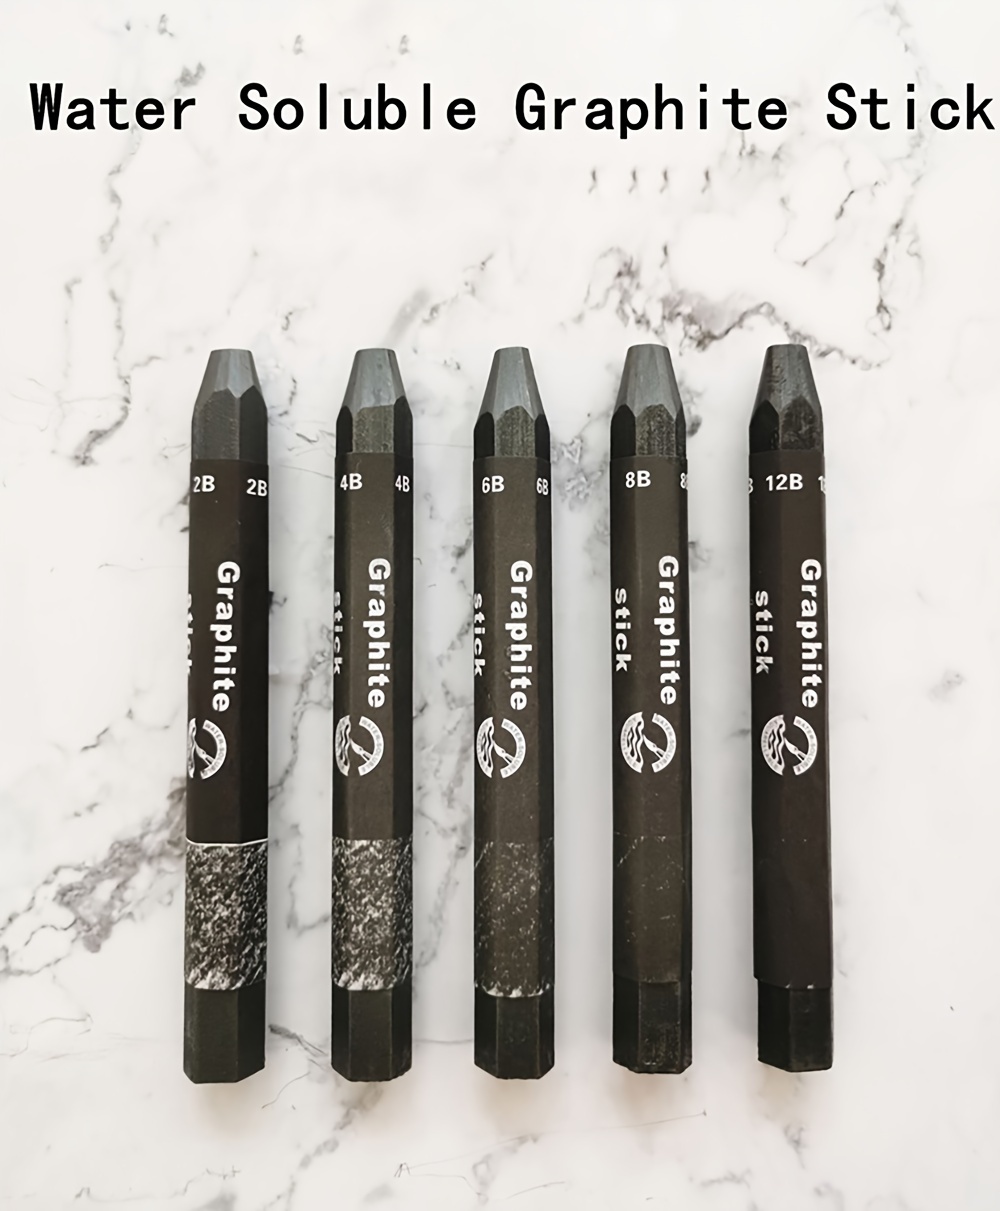 preloved] Watersoluble Graphite Sticks